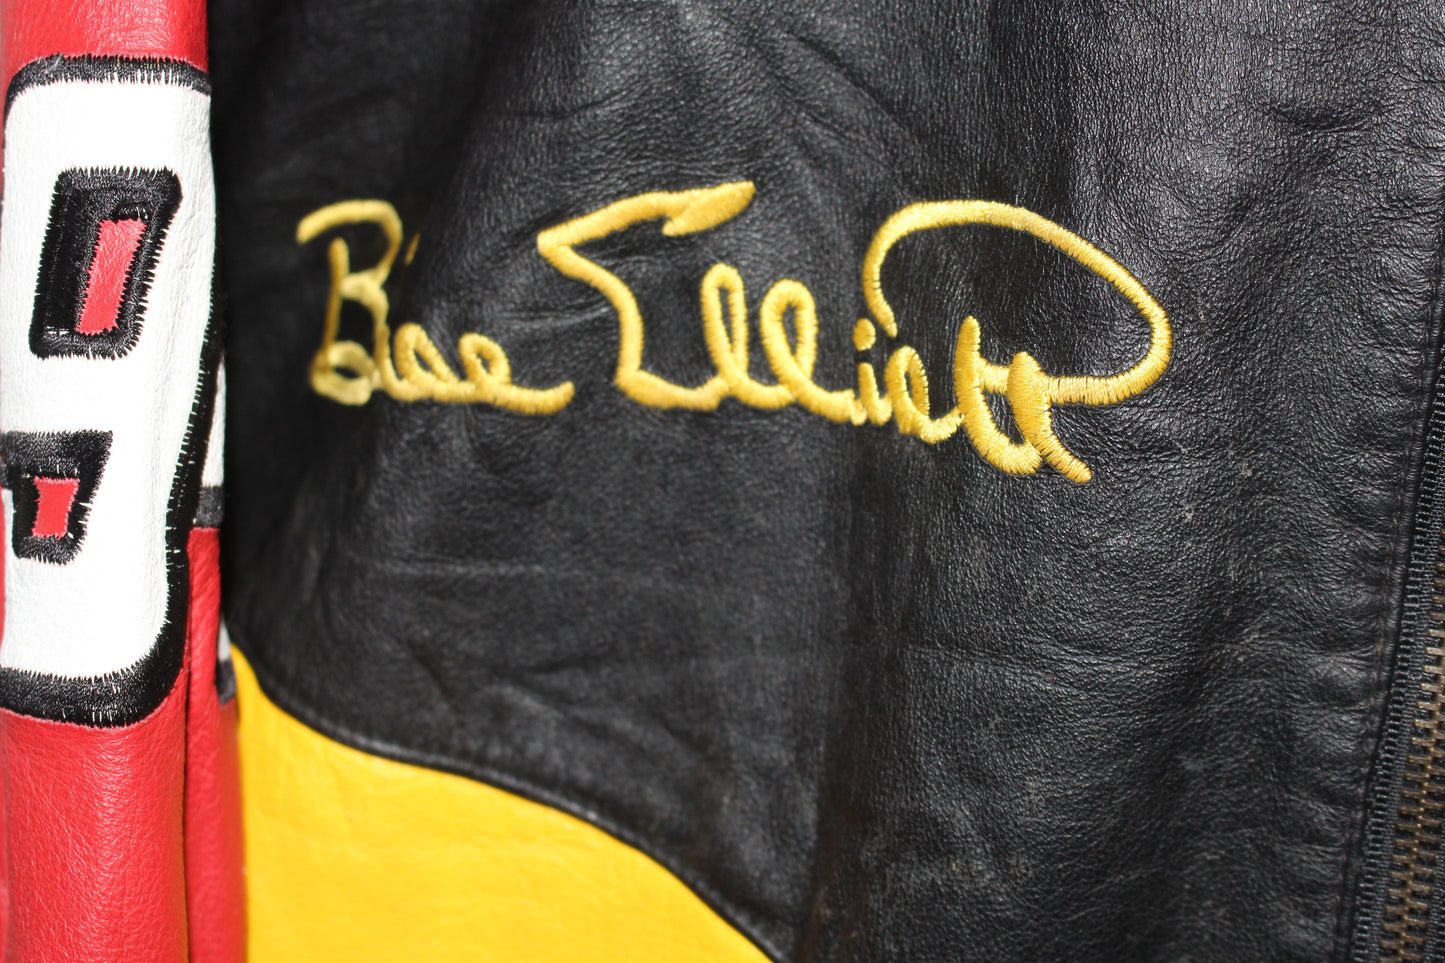 Rare McDonald’s Racing NASCAR Bill Elliott #94 Leather Jacket (L)